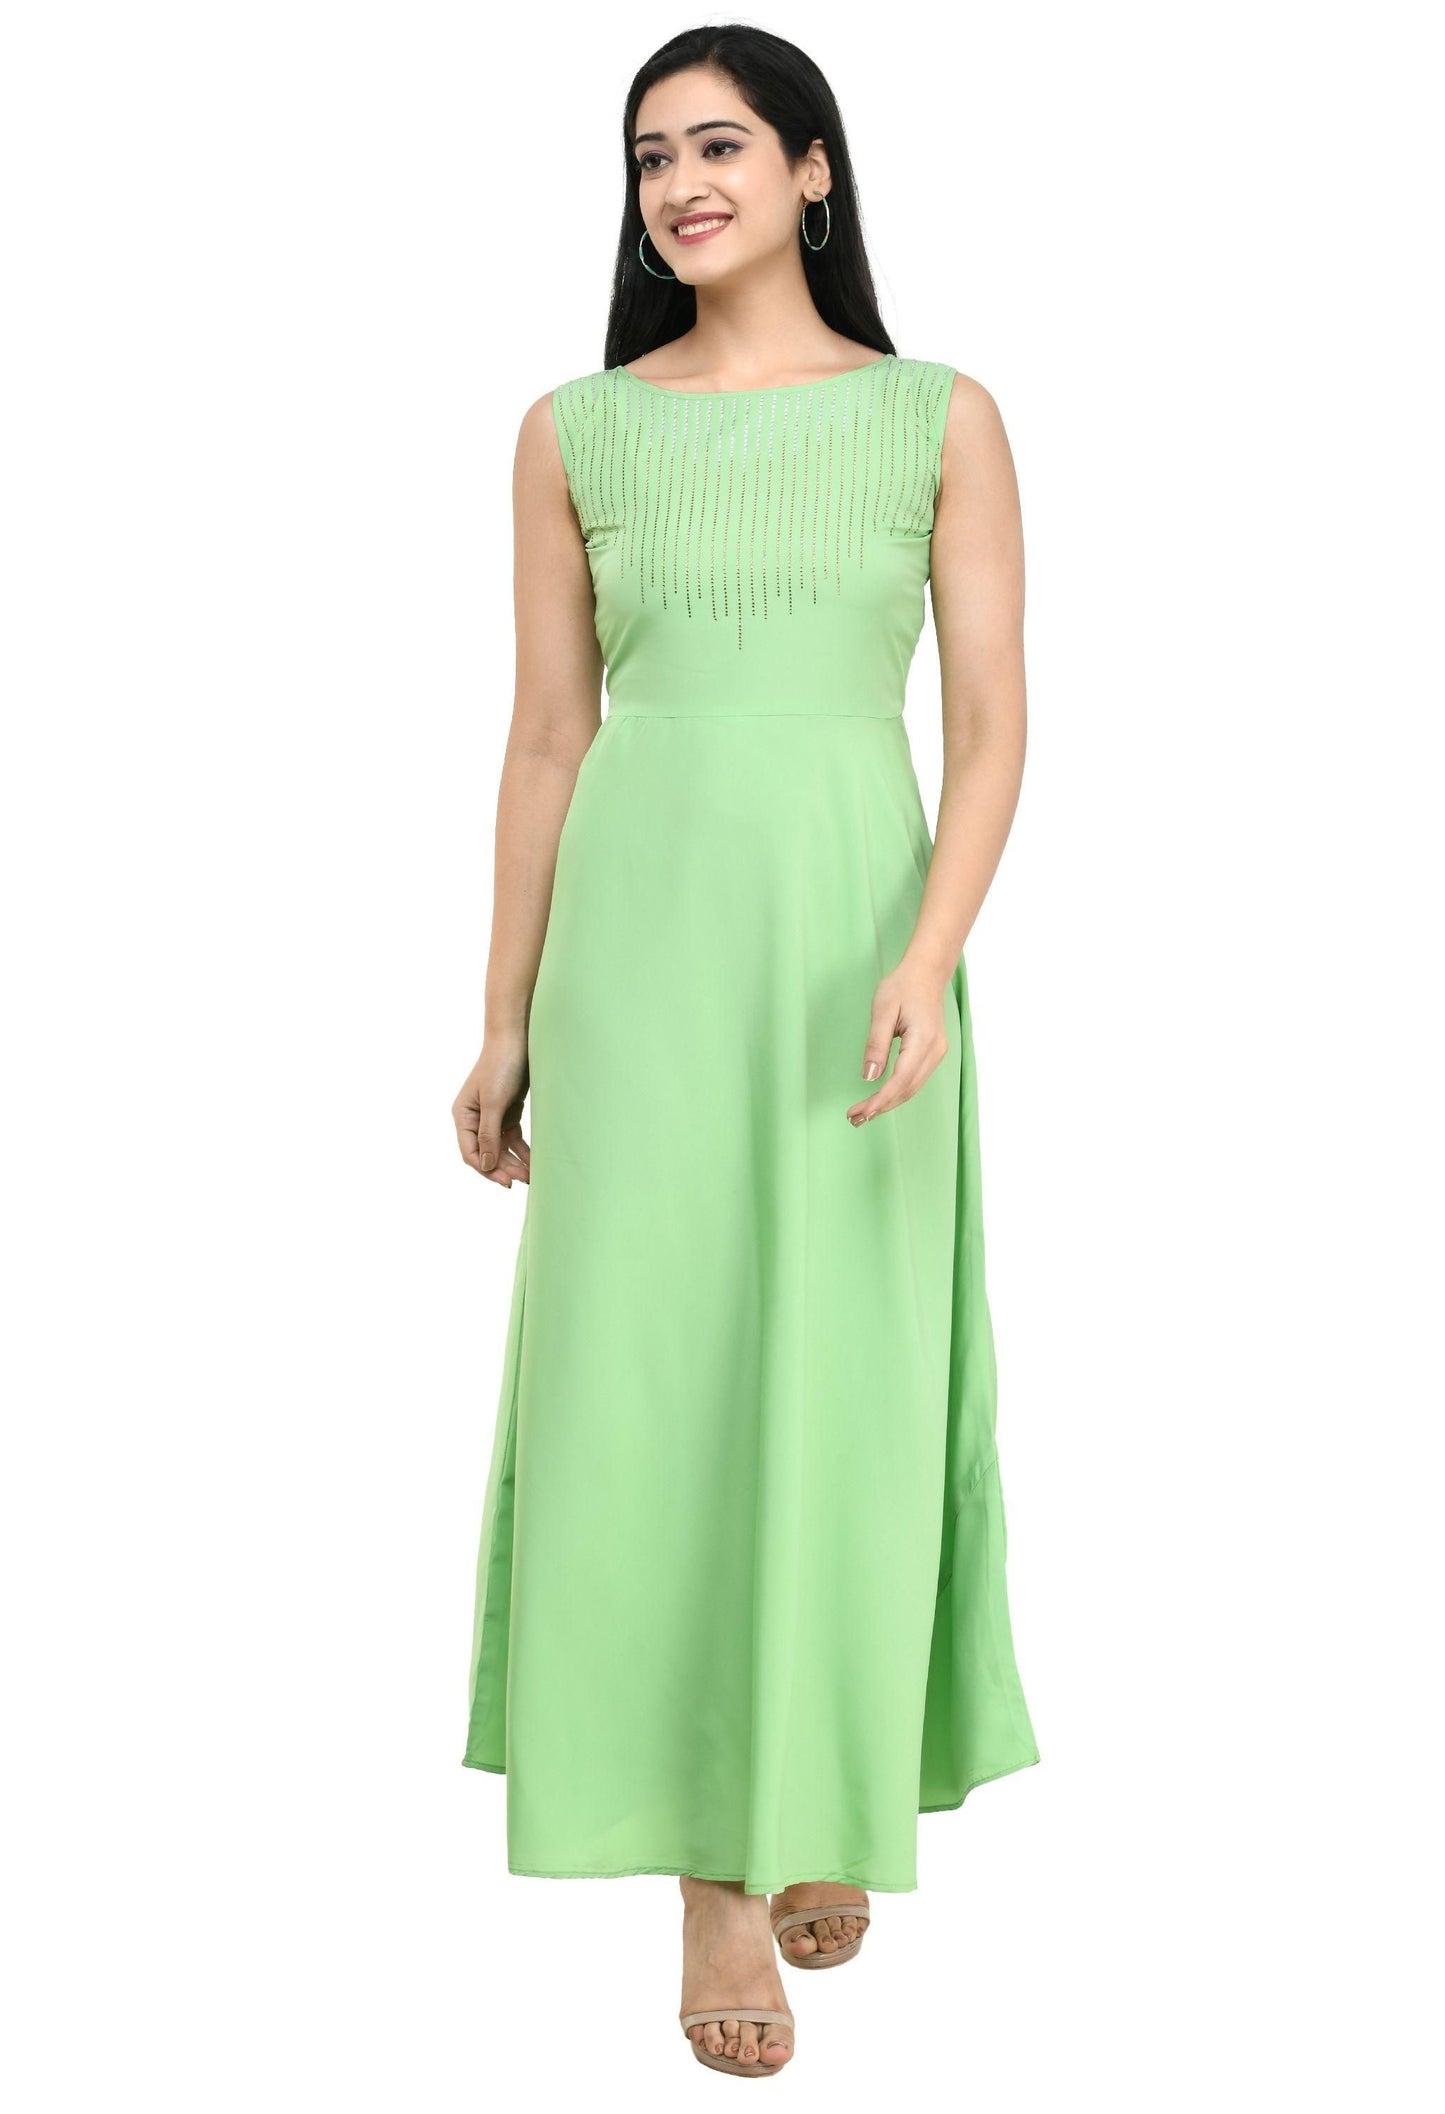 Oceanista Women's Crepe Embellished Partywear Pista Green Maxi Dress